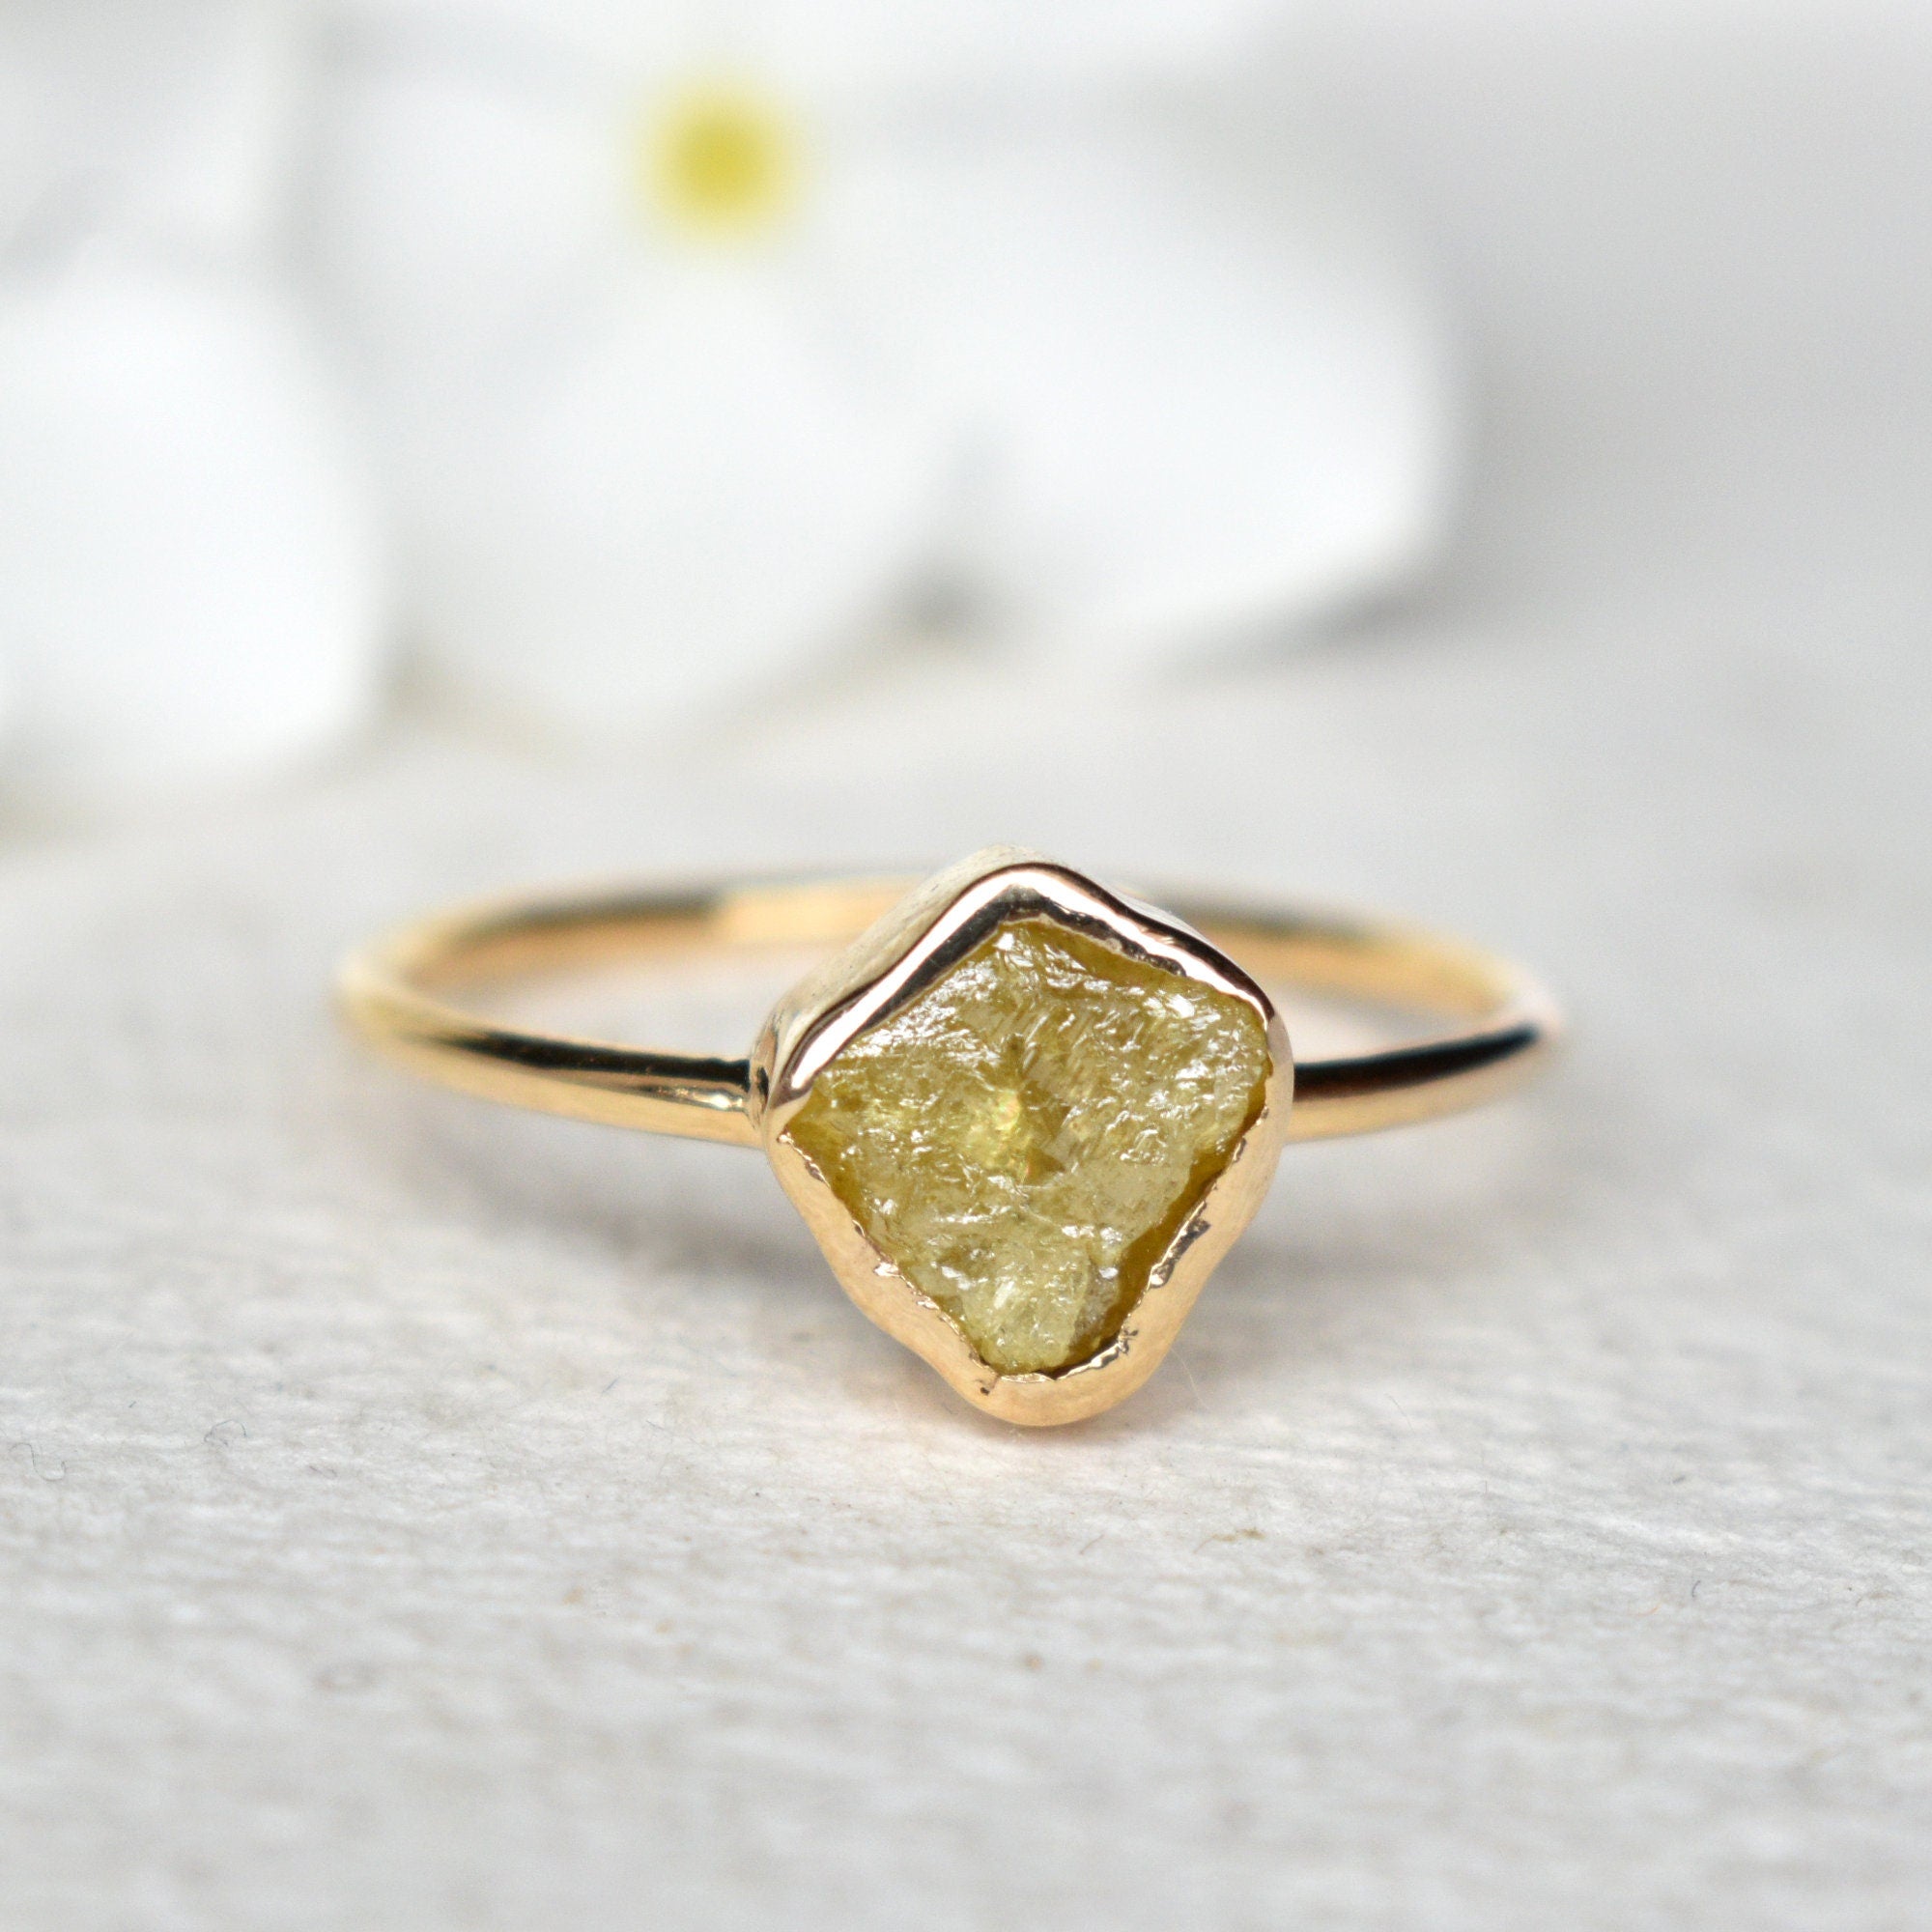 1.25 Carat Fancy Yellow Rough Diamond Ring, 14k Solid Yellow Gold Bezel Set Ring, Uncut Natural Diamond Wedding Engagement Ring